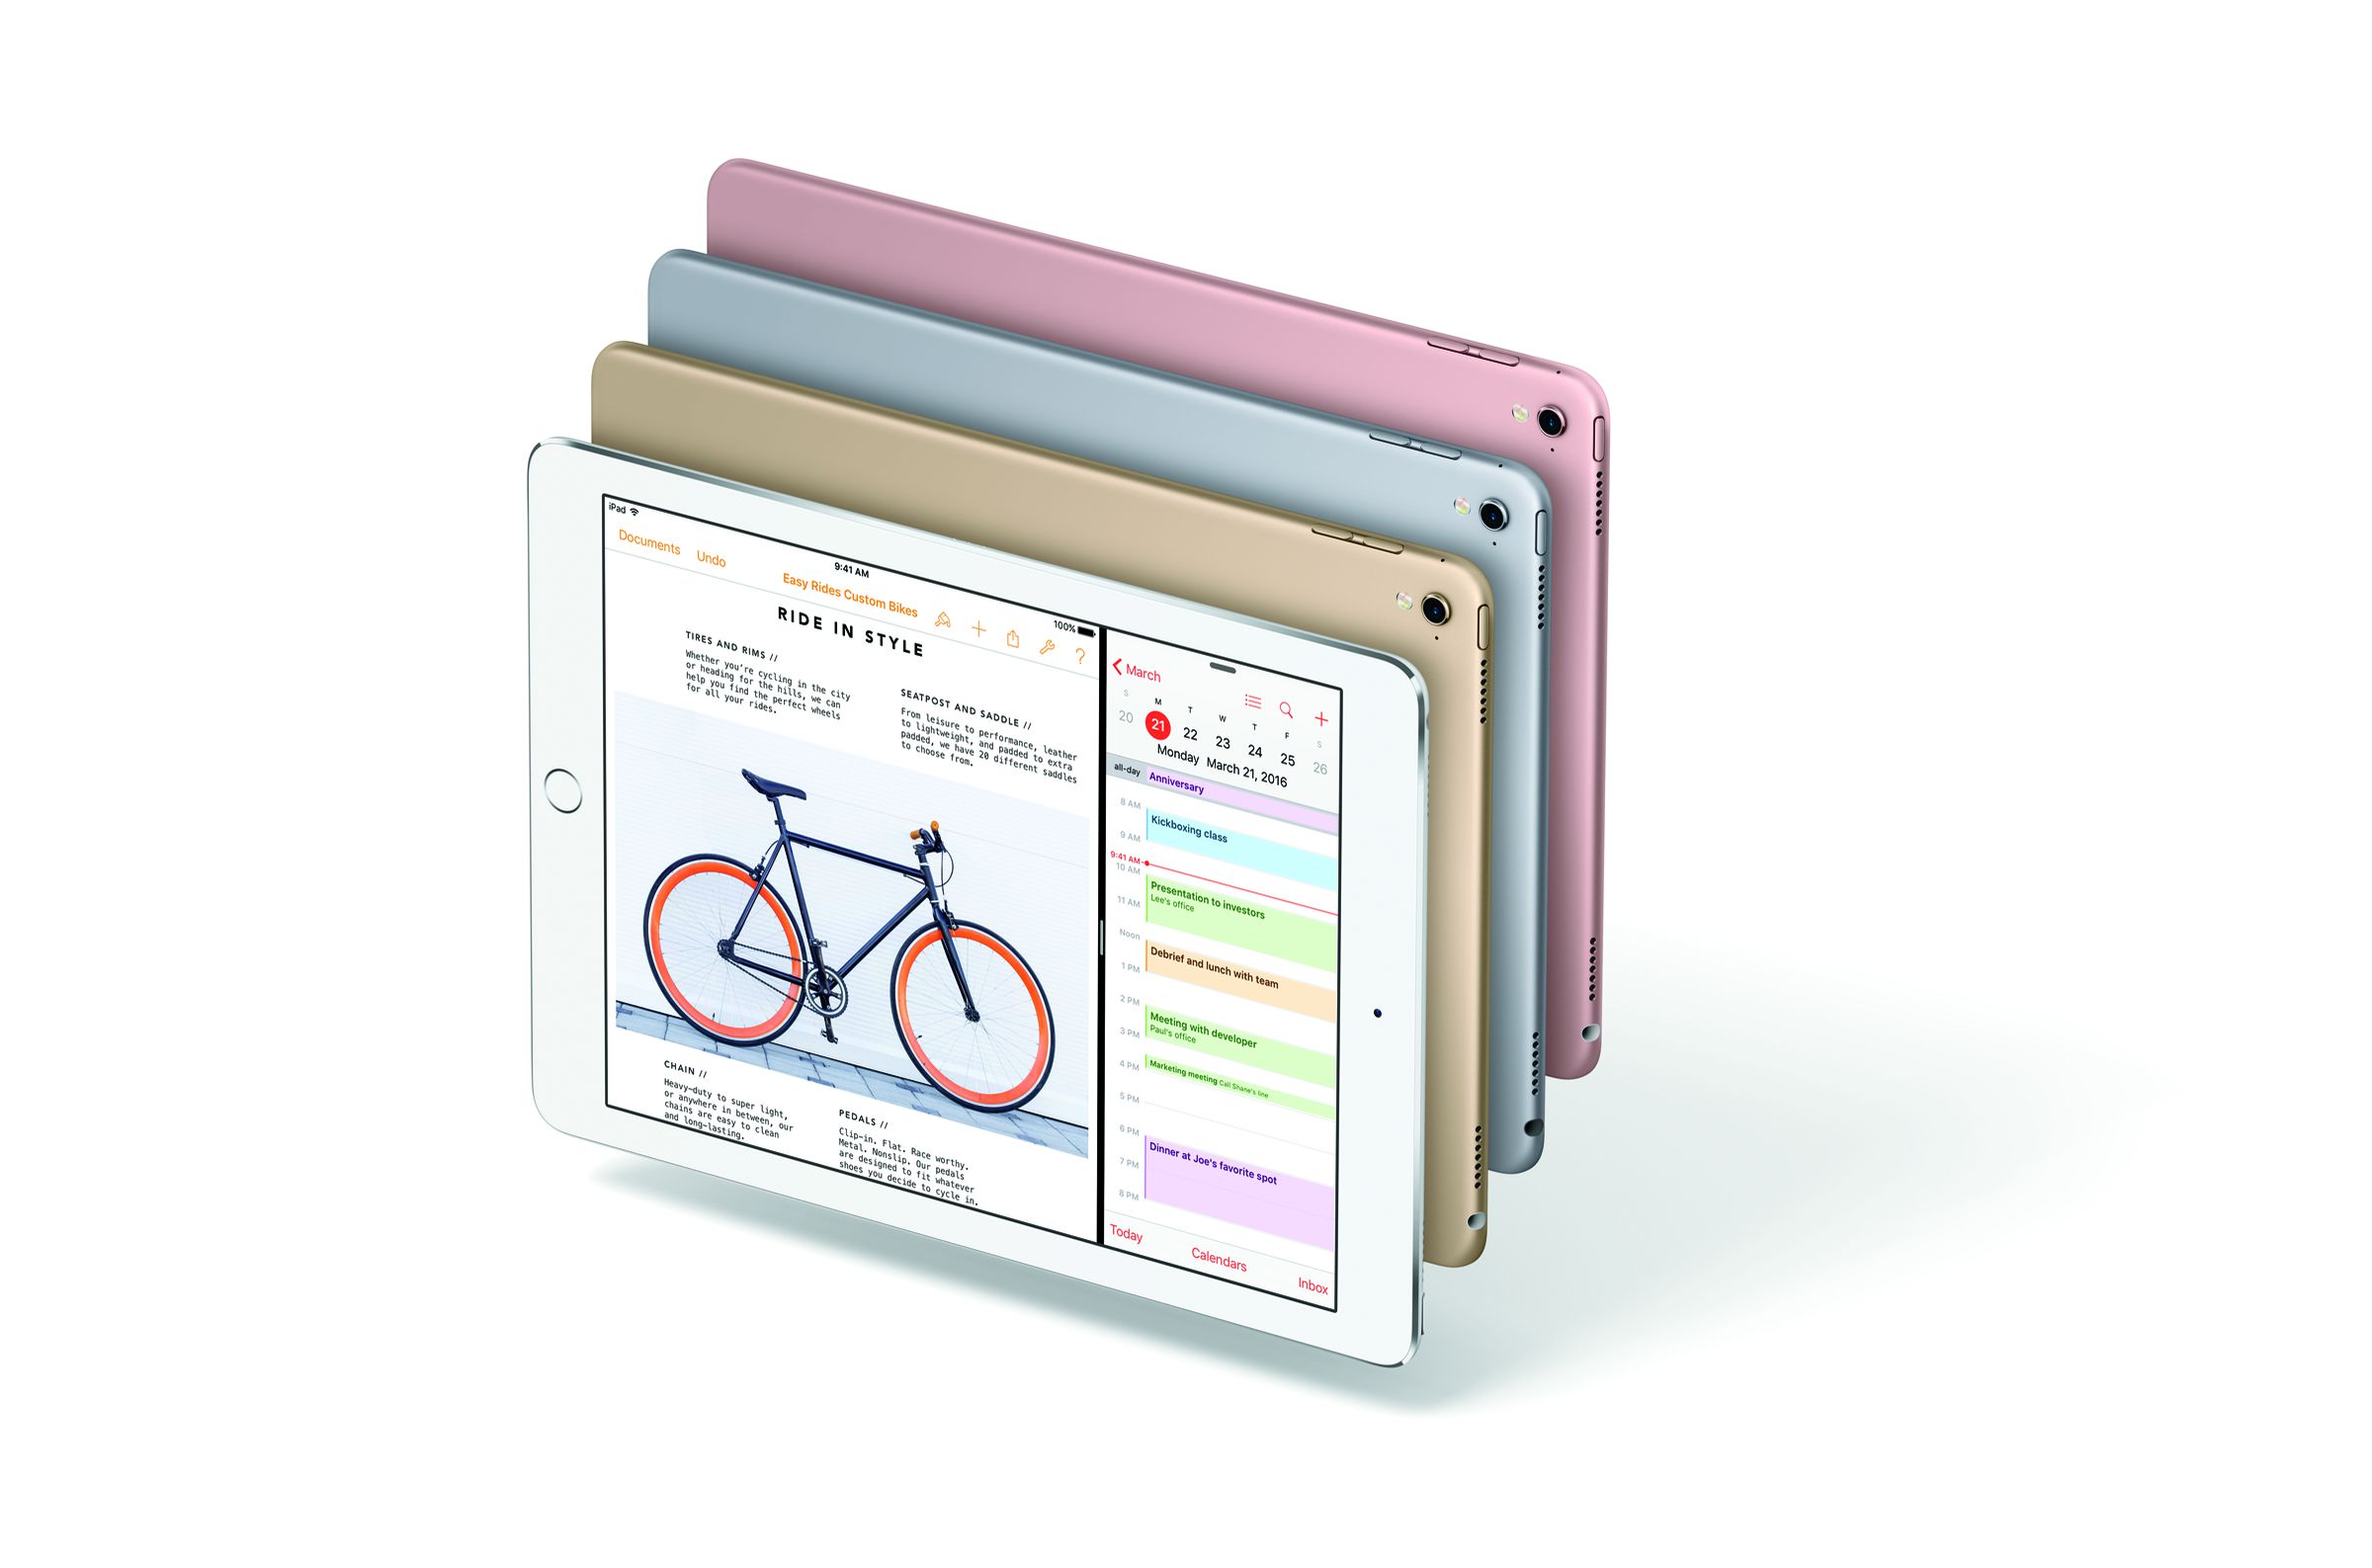 Apple 9.7-inch iPad Pro PR photos